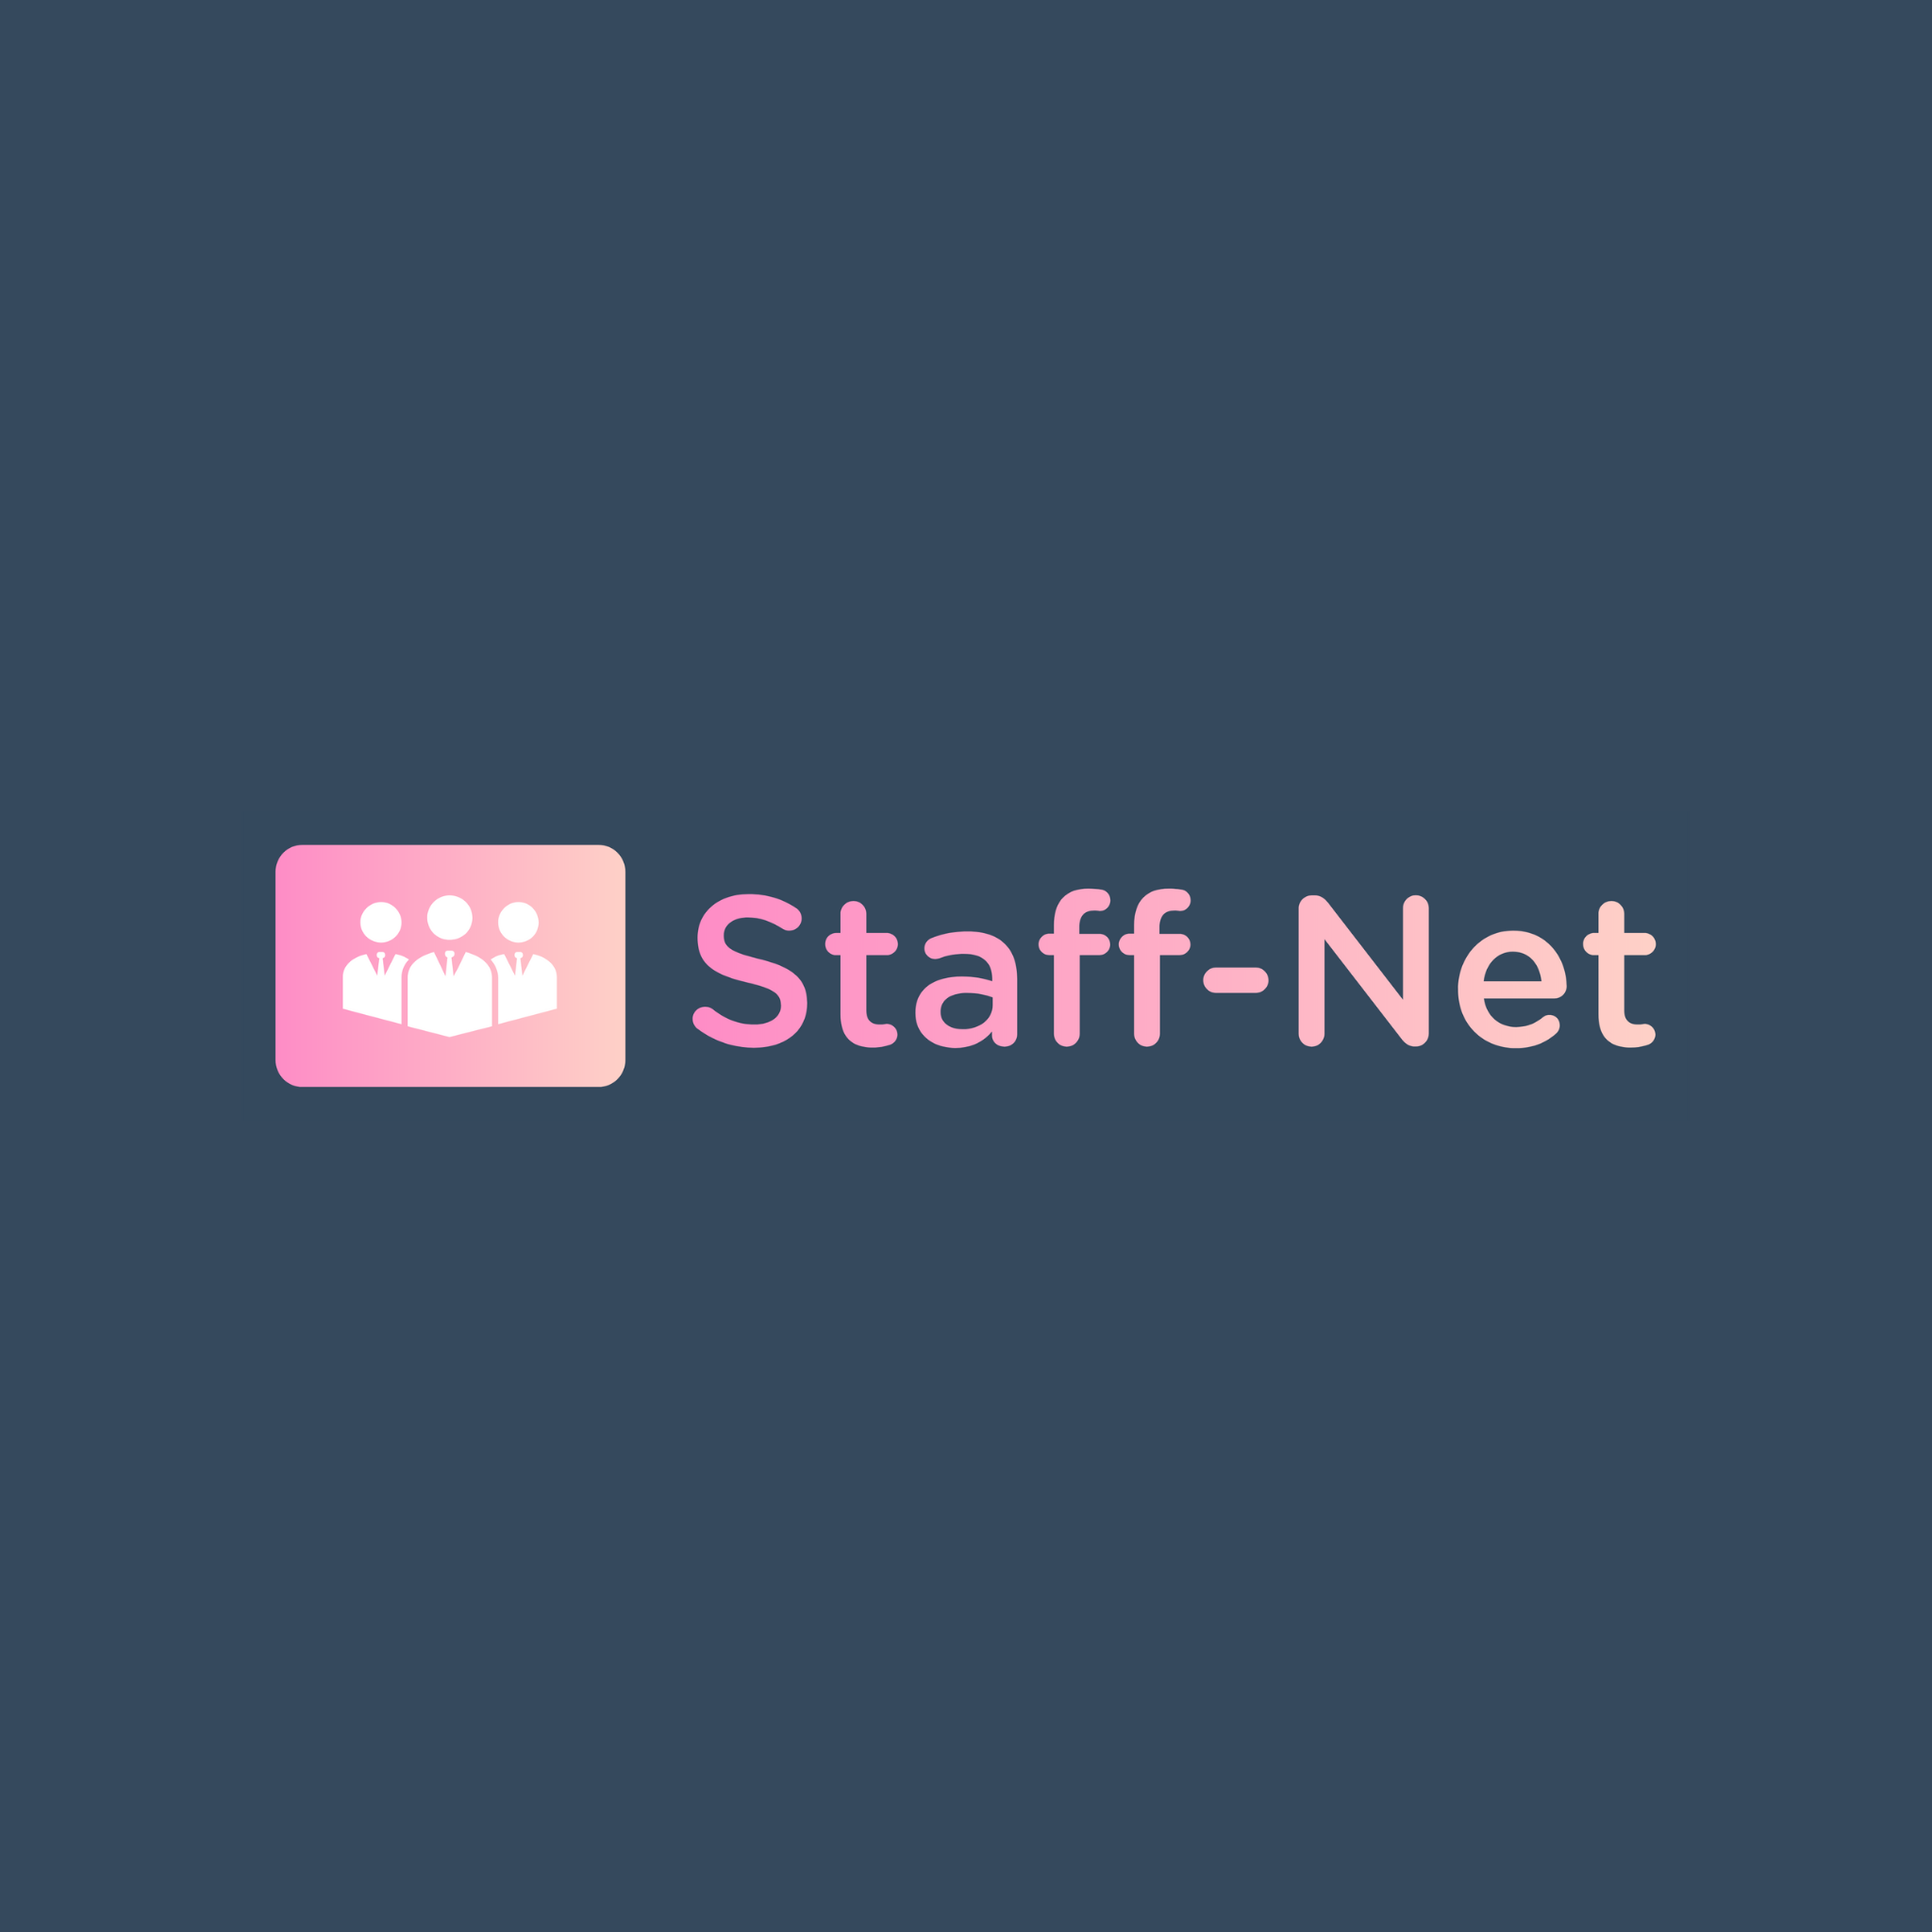 Staff-Net